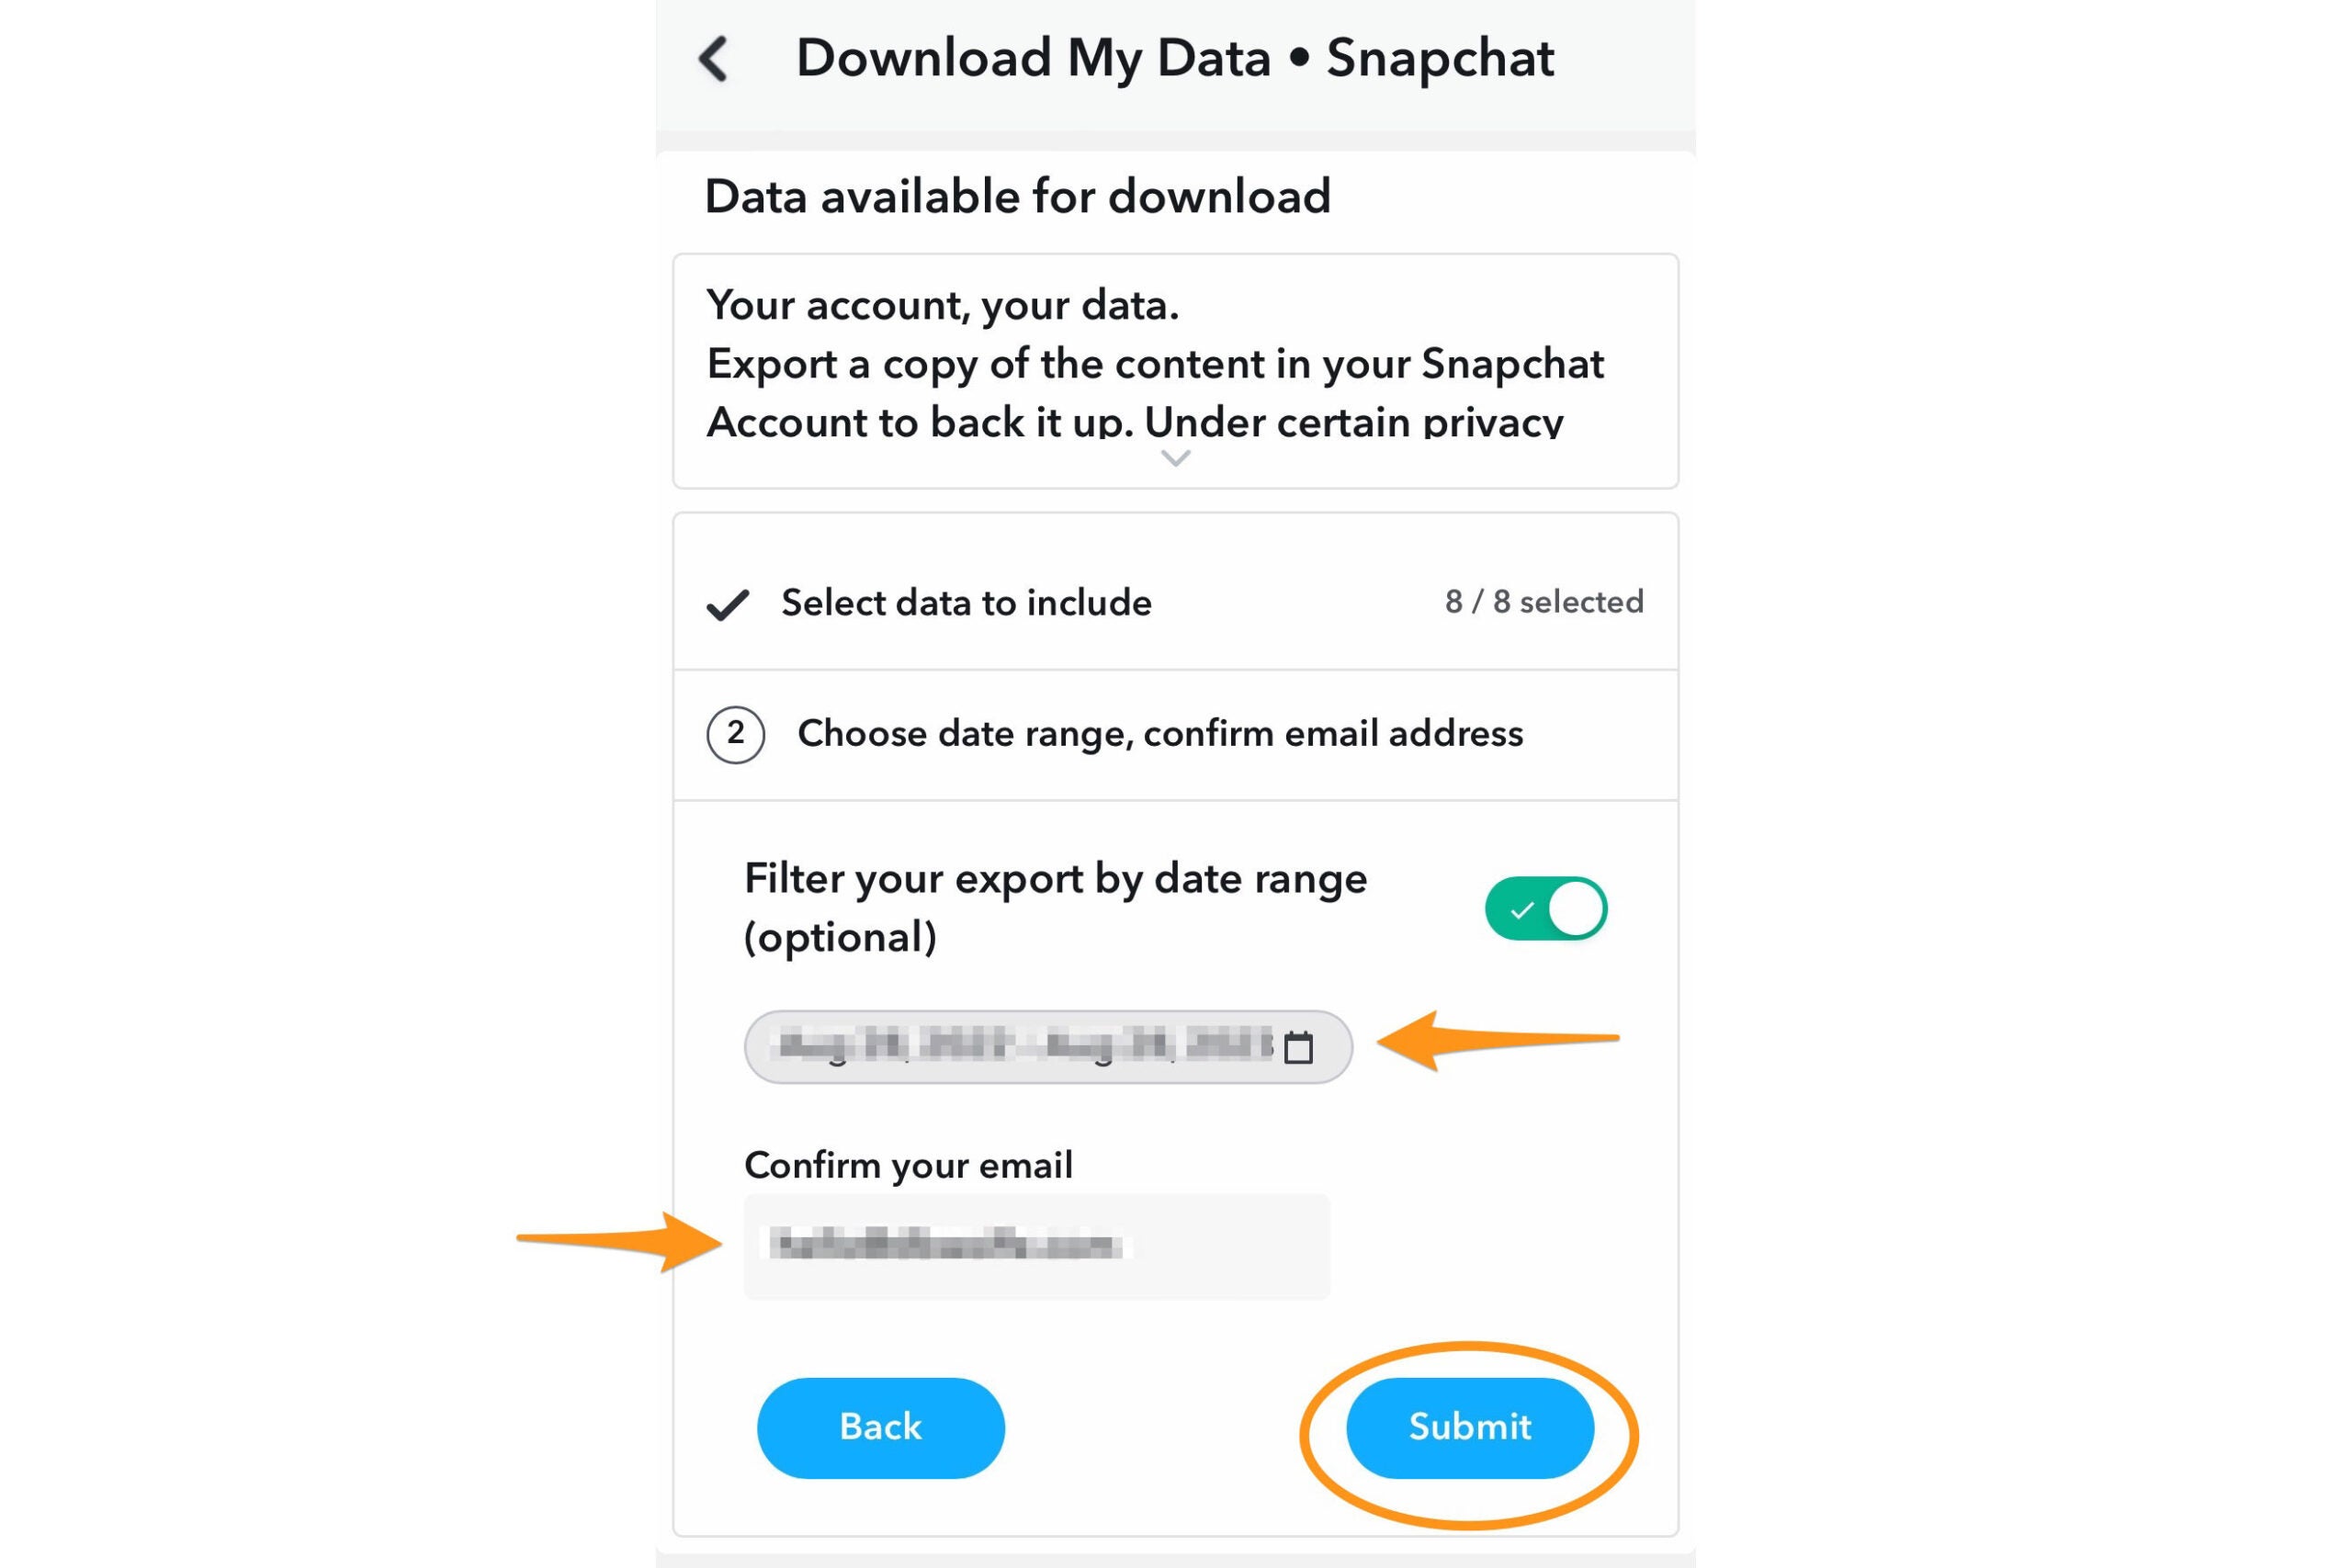 The date range options for downloading Snapchat data.